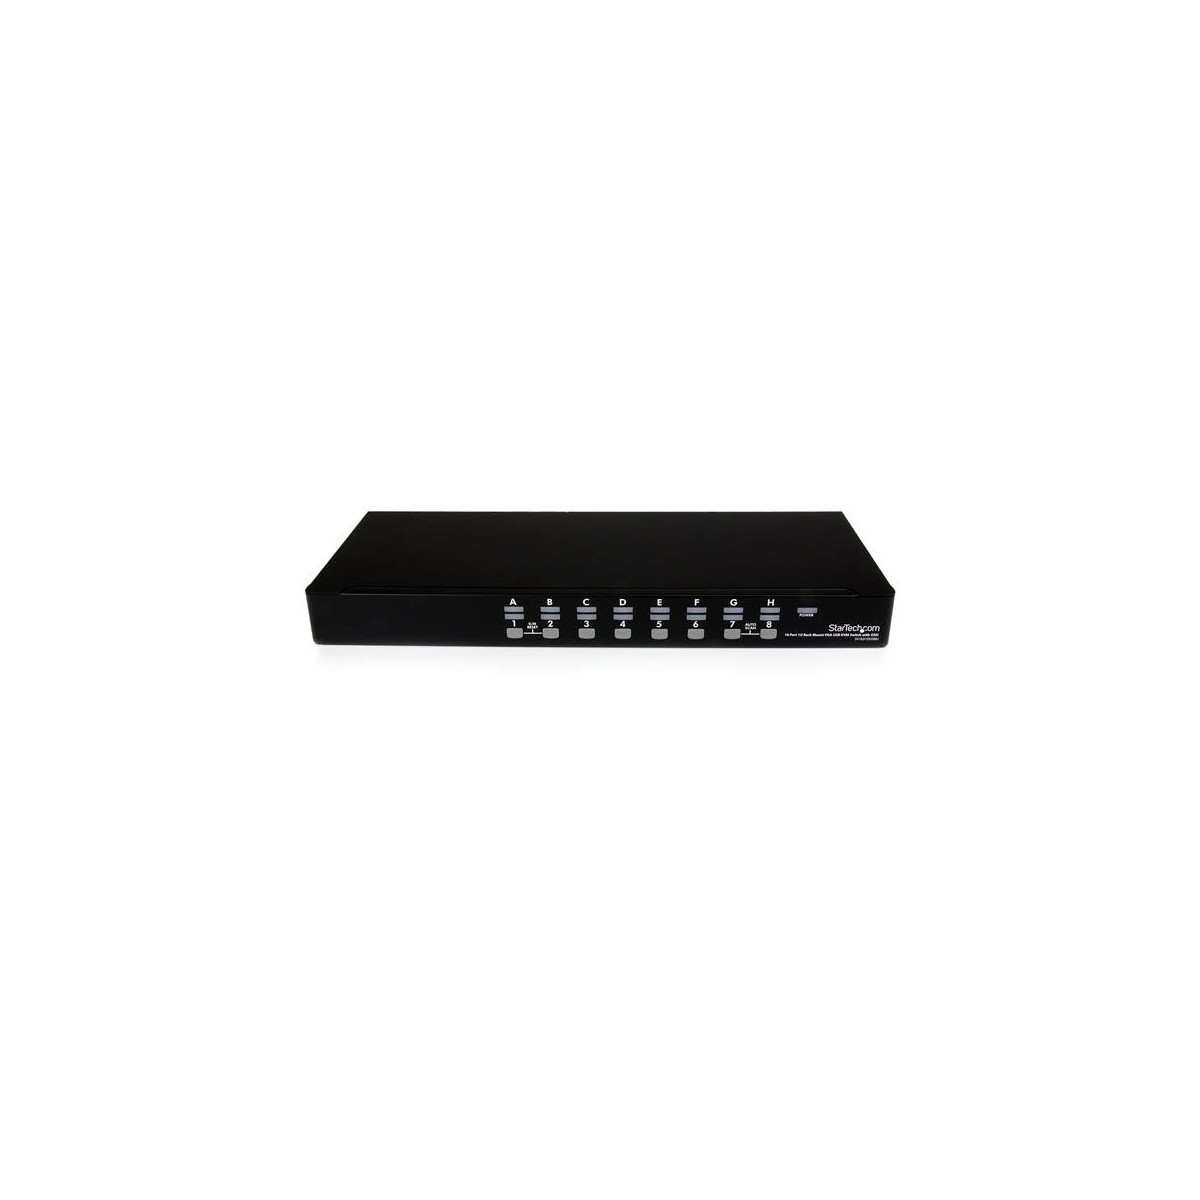 StarTech.com 16 Port 1U Rackmount USB KVM Switch Kit with OSD and Cables - 1920 x 1440 pixels - Black